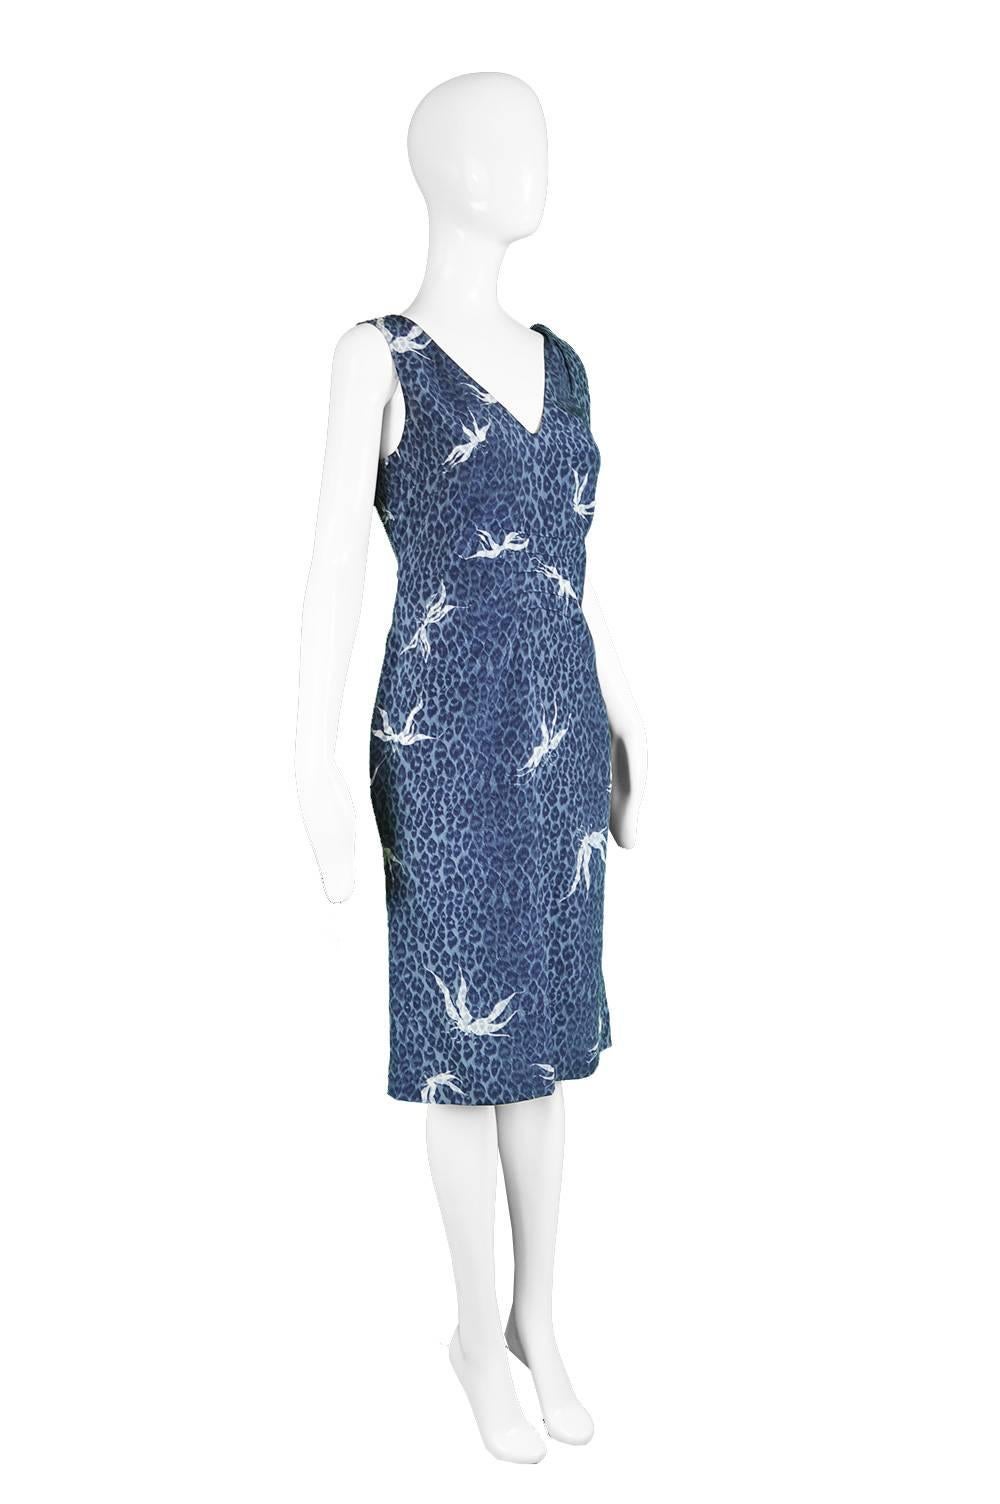 Chloé by Stella McCartney Vintage Sleeveless Blue Silk Leopard Dress, S / S 1999 2